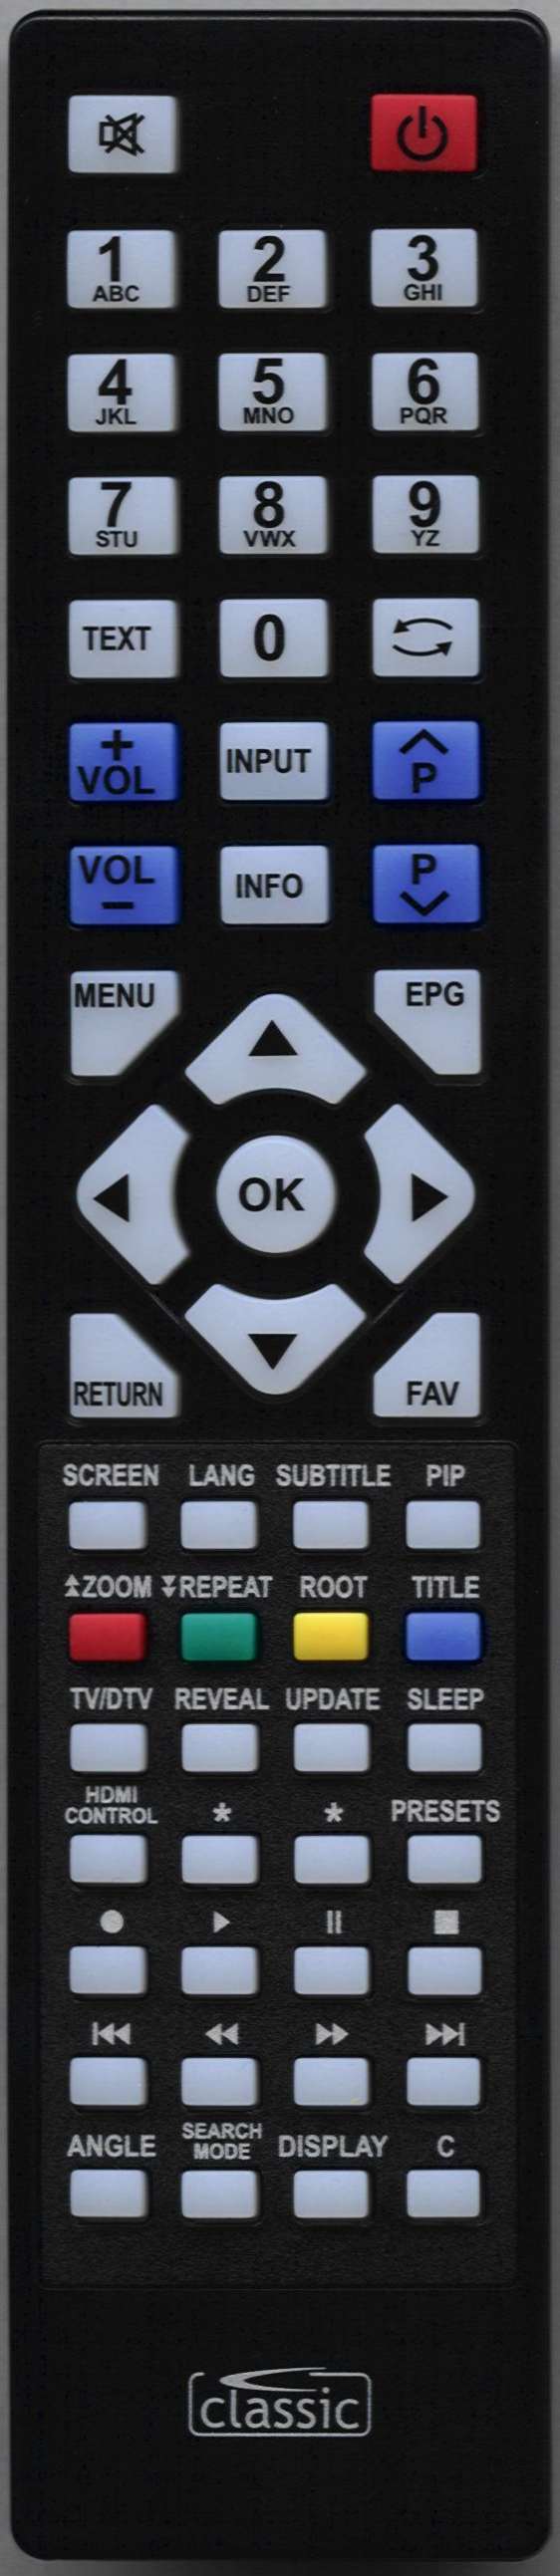 DIGIHOME 19860HDDVD Remote Control Alternative